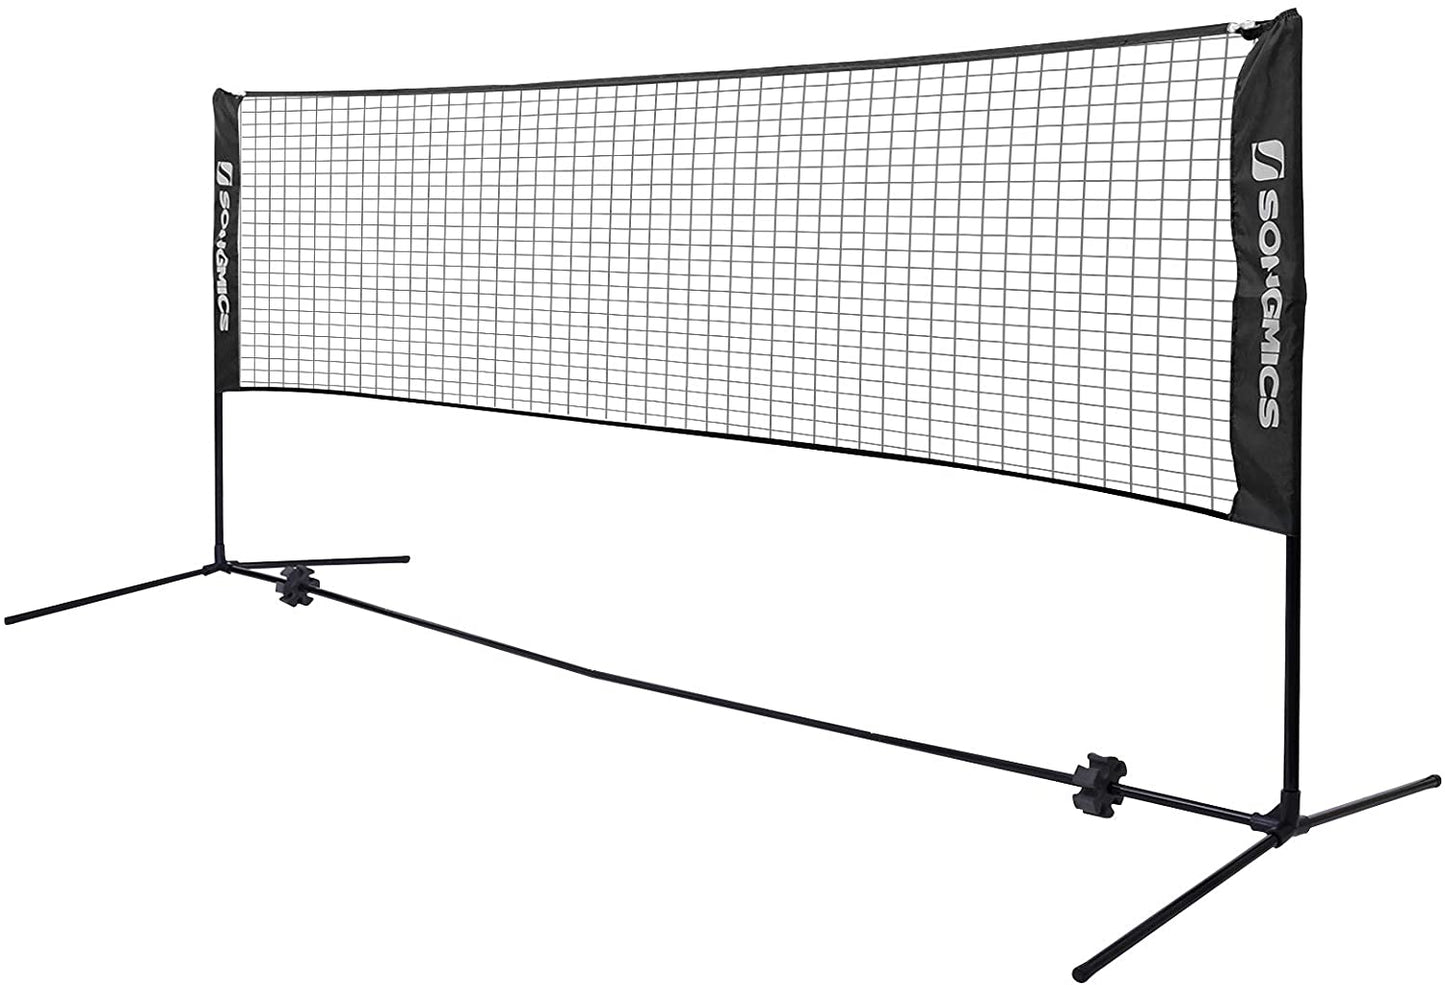 Nancy's Fullarton Badminton Net - Tennis Net - Height Adjustable - Iron Frame - Transport Bag - Blue - Black - Yellow